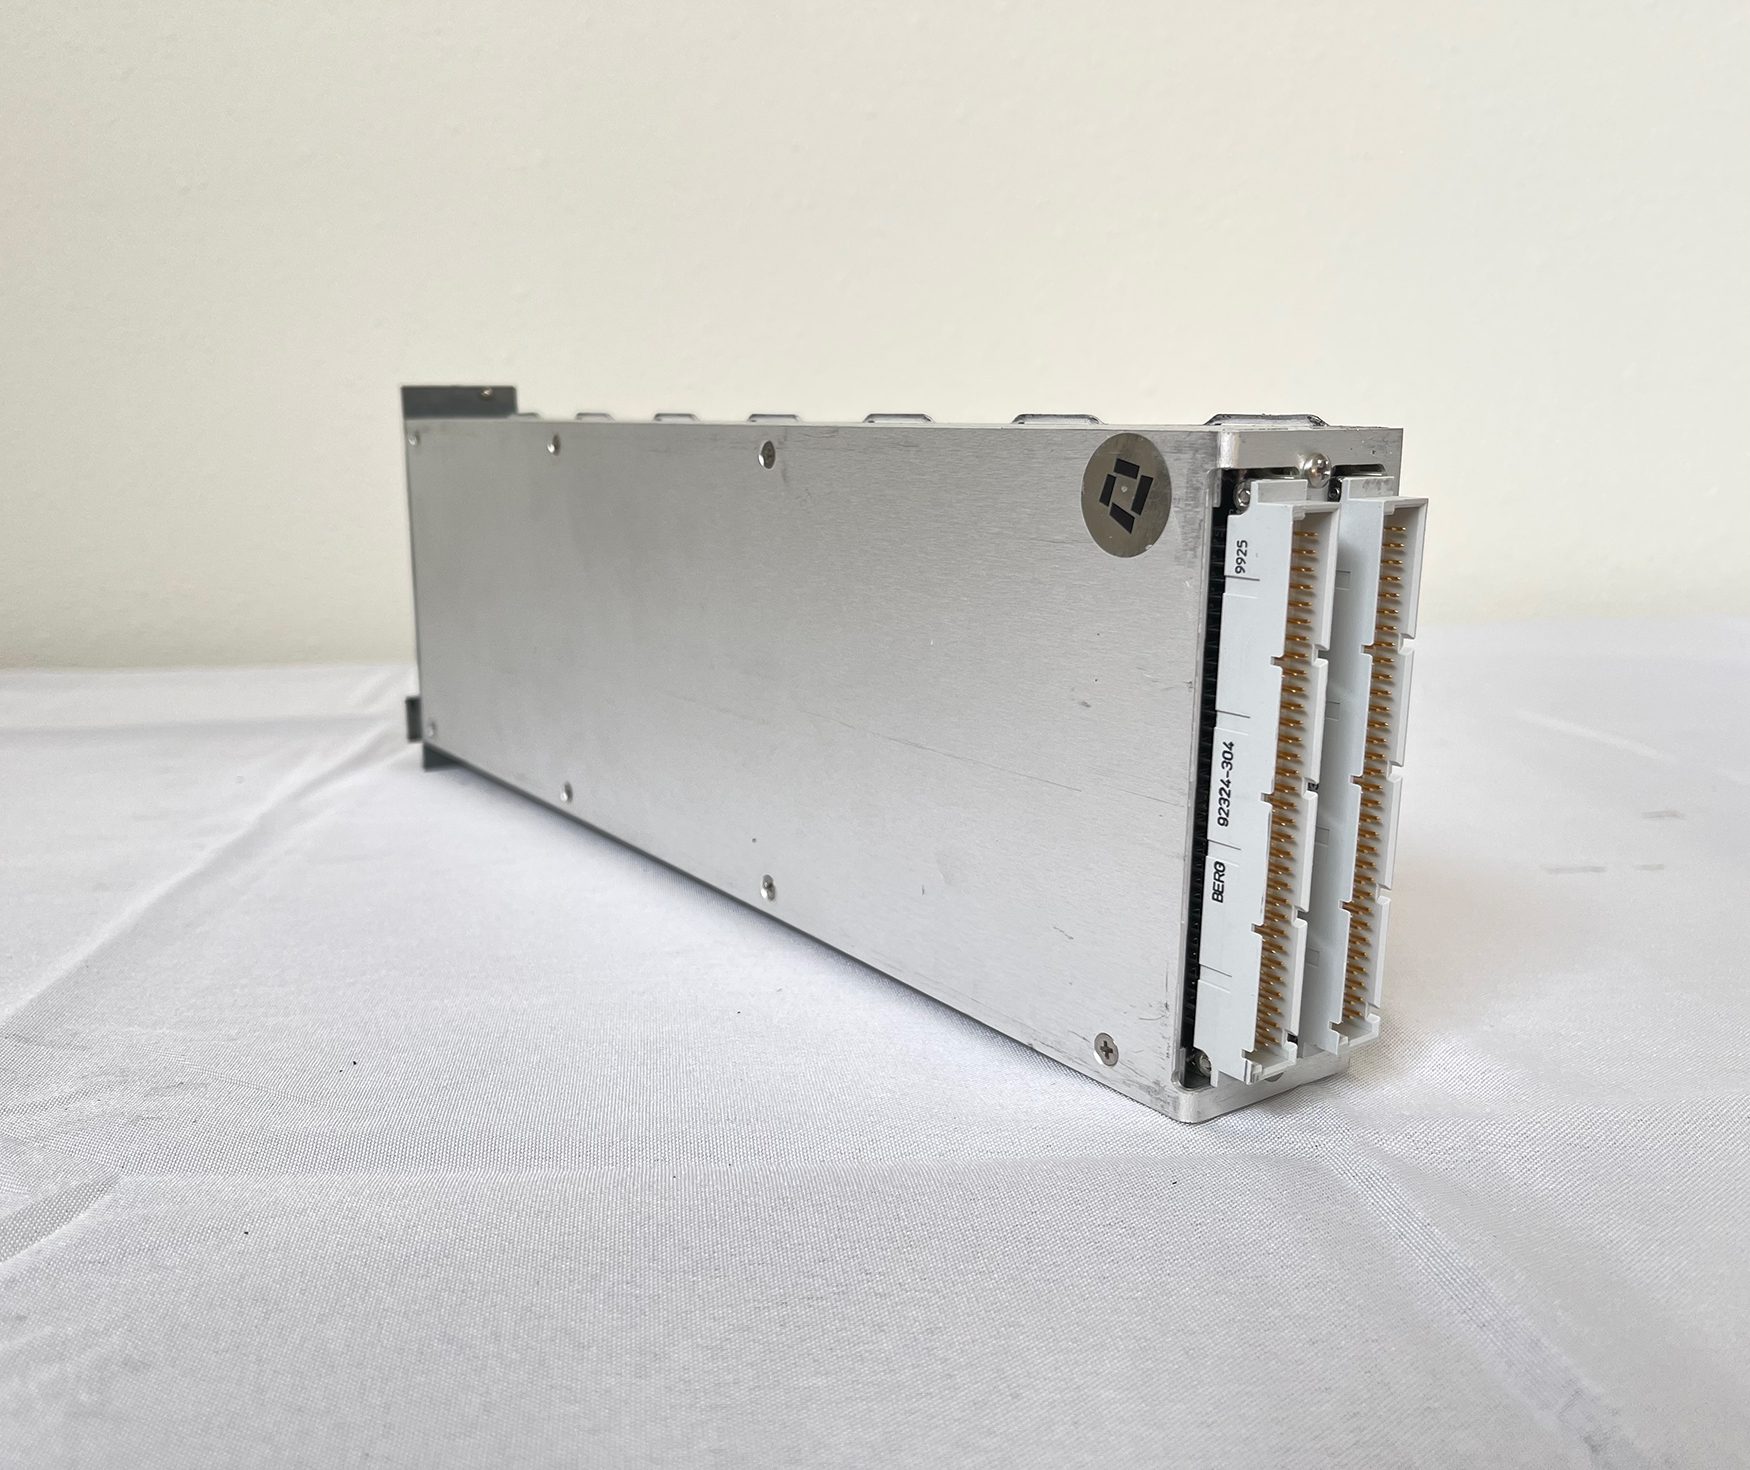 JDSU SWS 15107 Detector Module -61955 For Sale